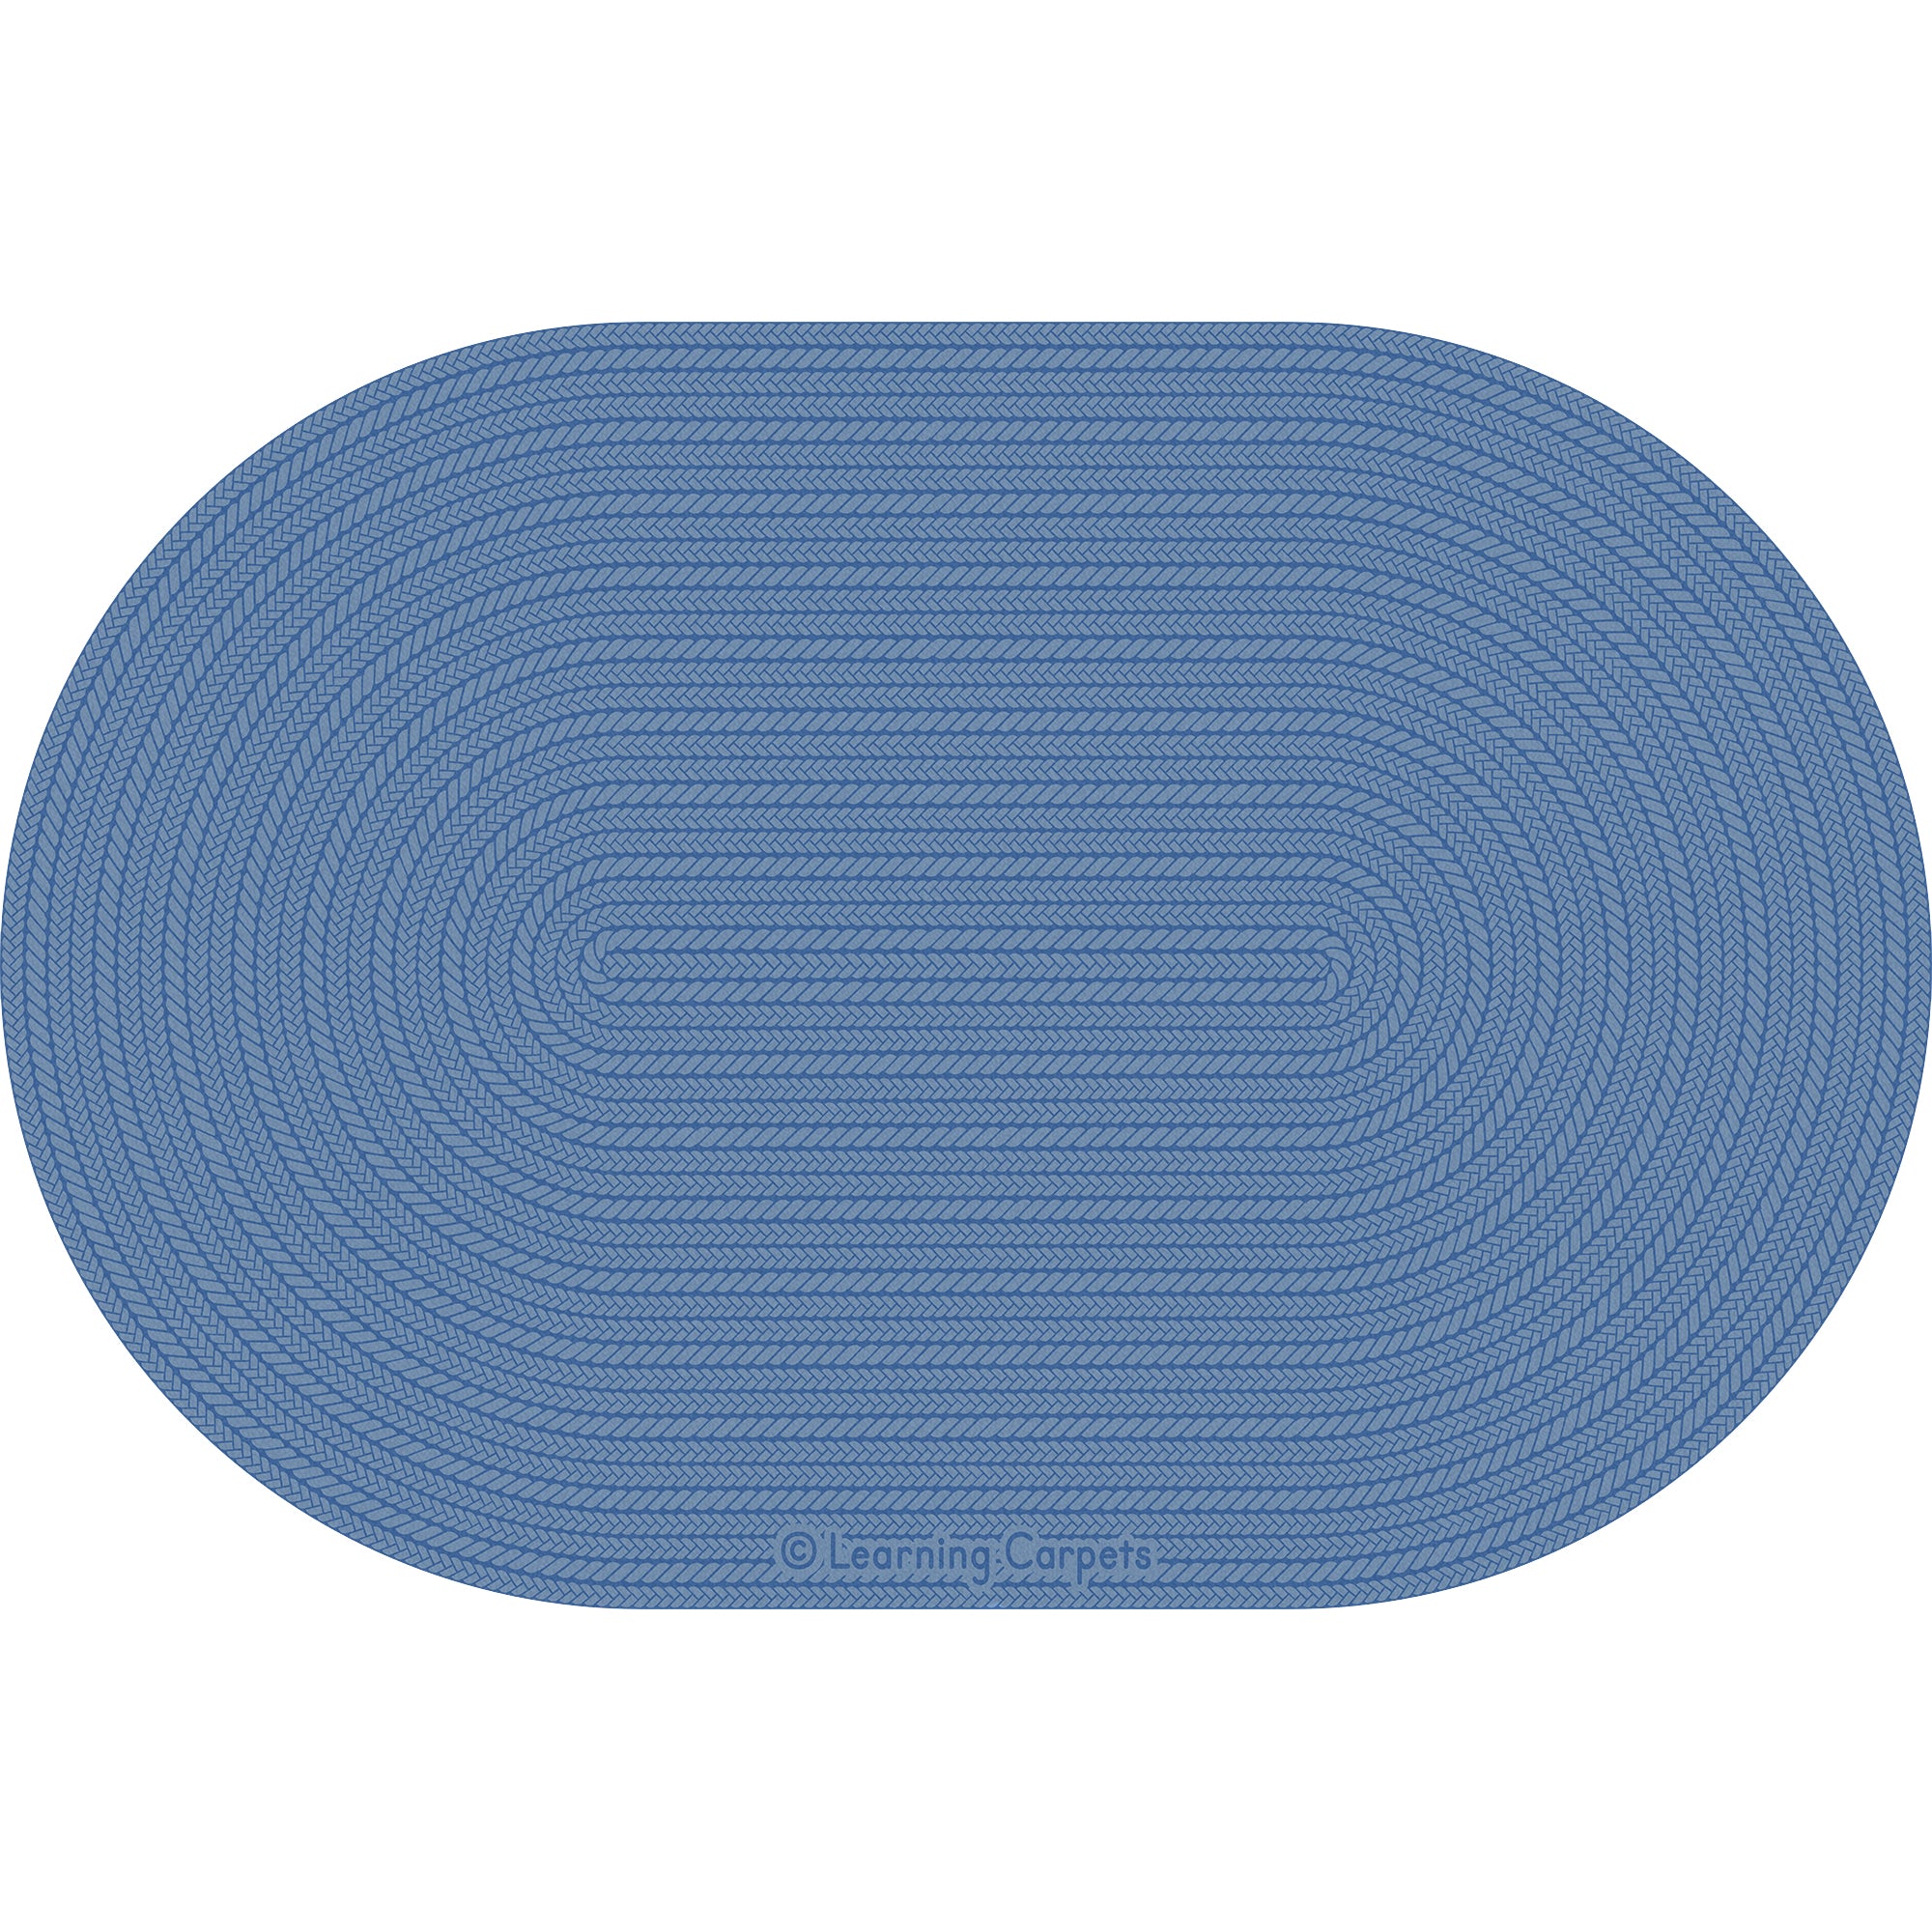 Hearth Braid Blue Educational Rug – Oval Value Size